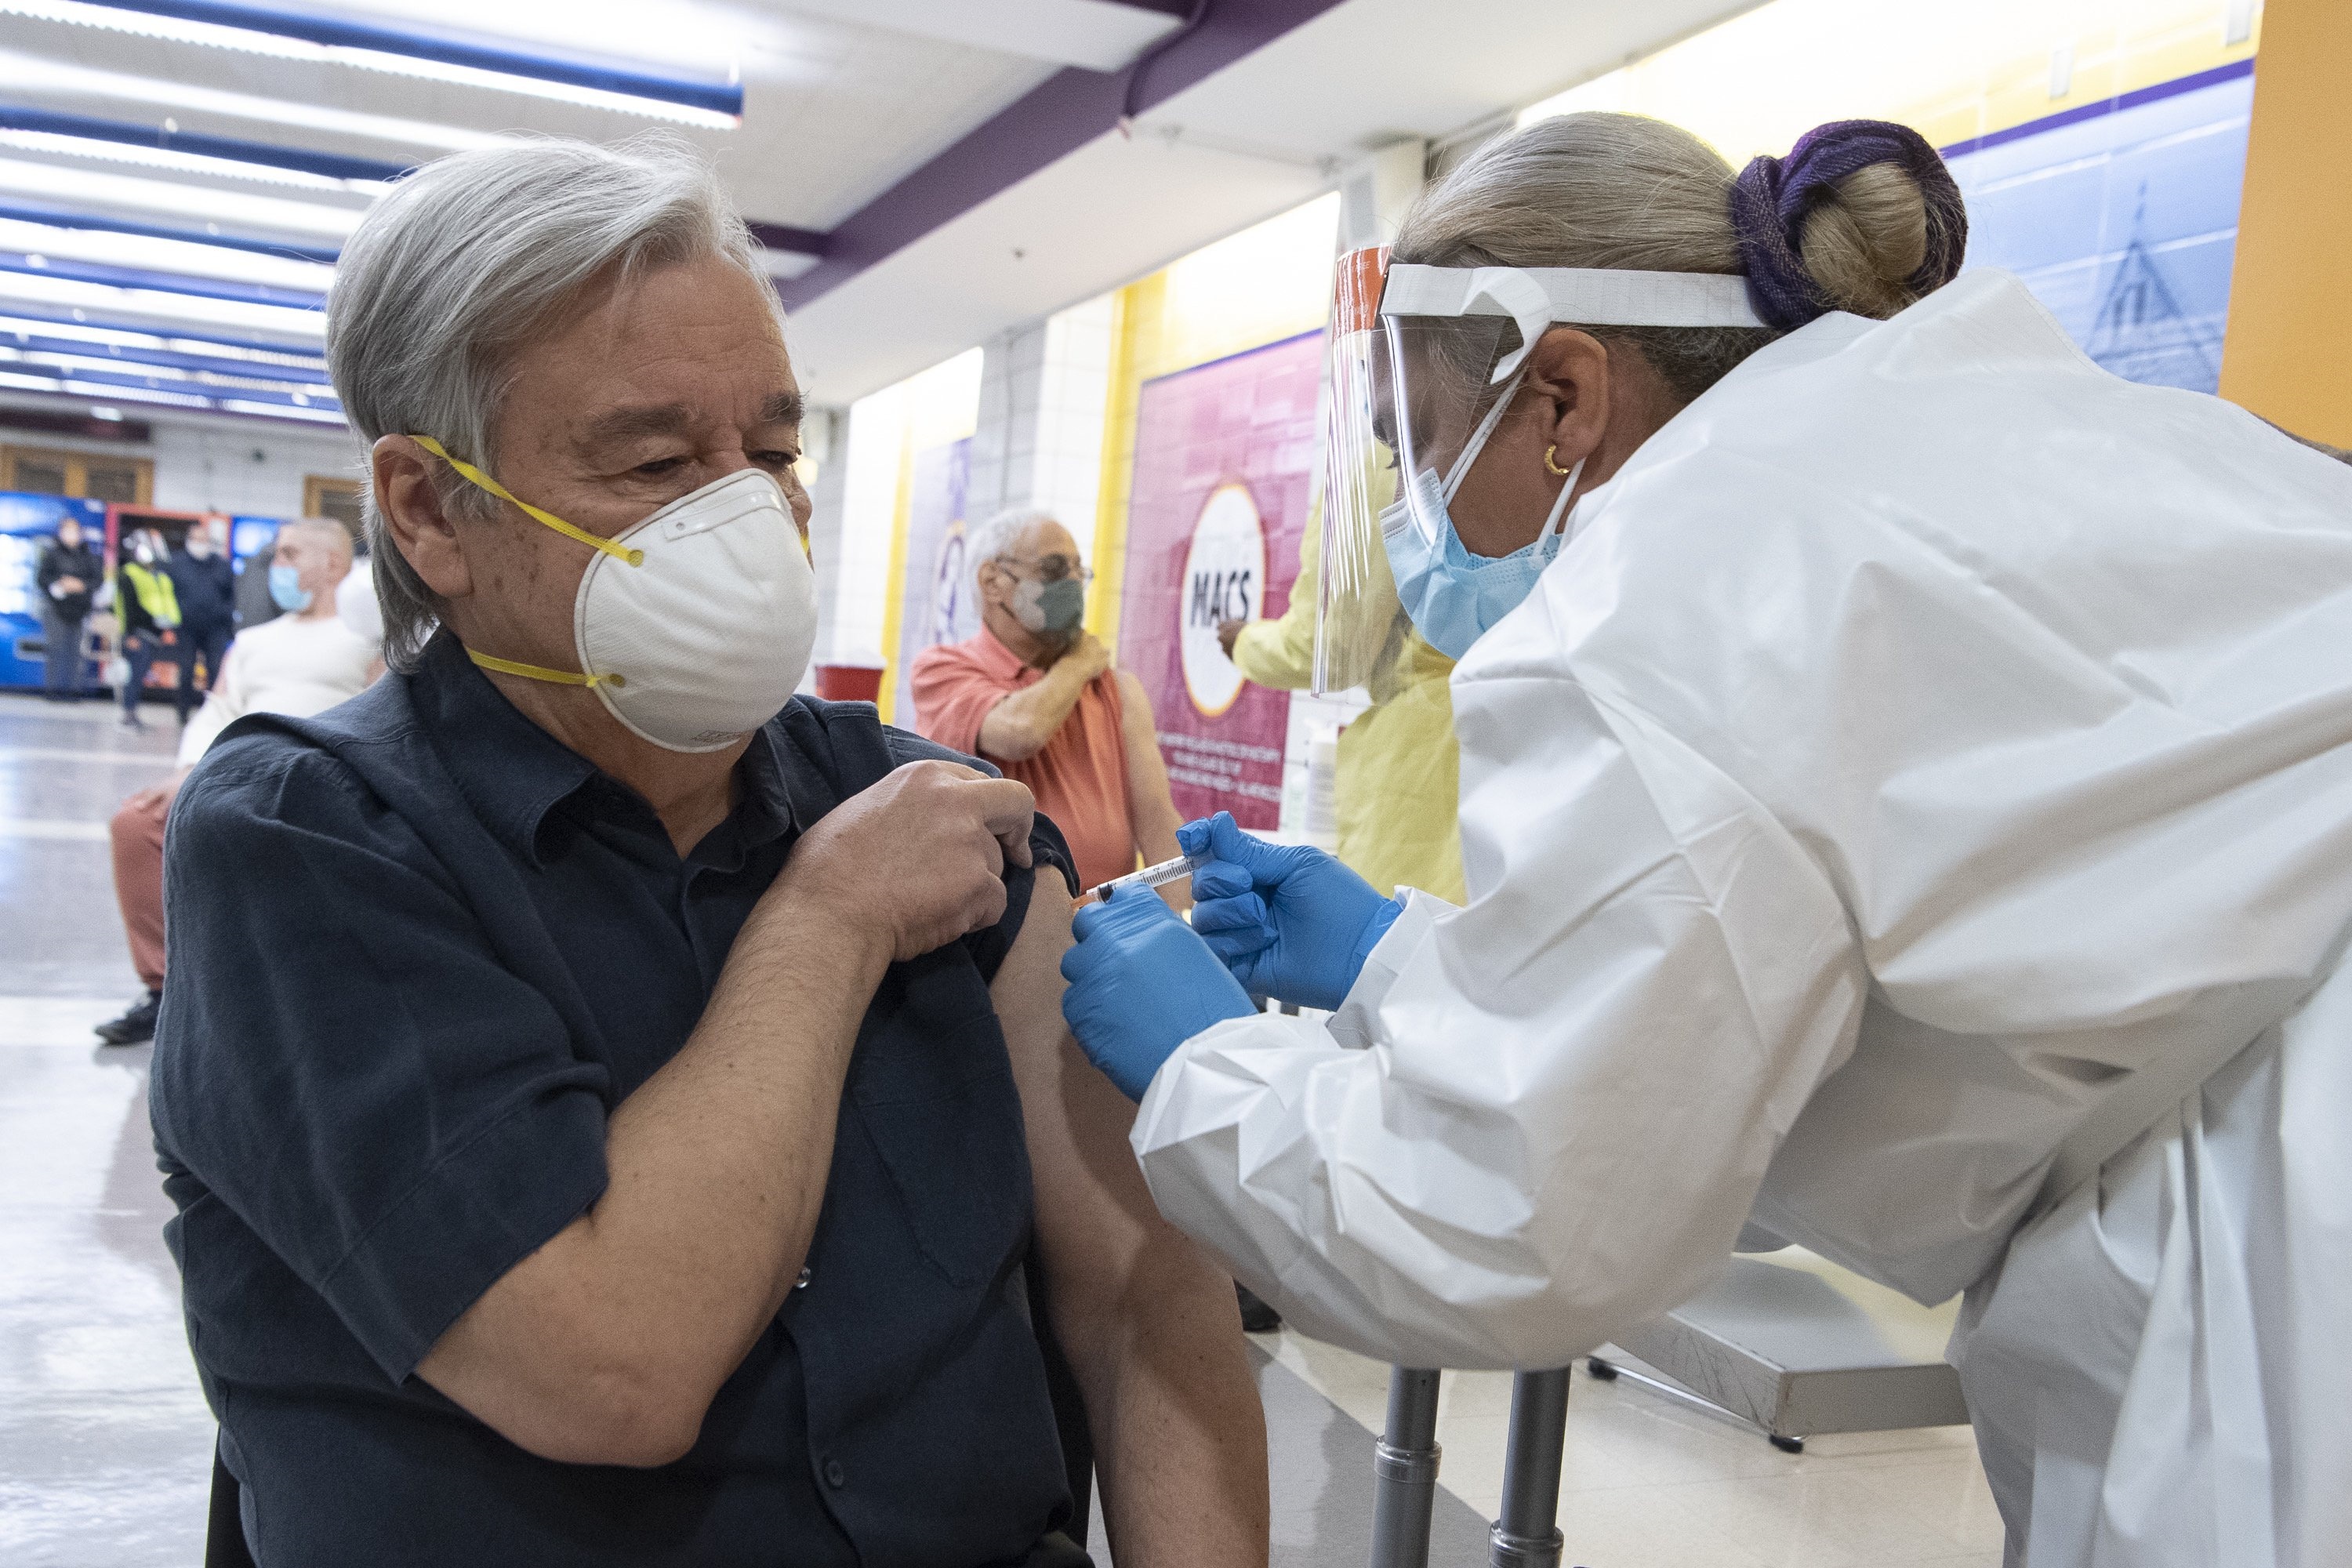 संयुक्त राष्ट्र के महासचिव एंटोनियो गुतारेस कोरोना टीका लगवाते हुए.